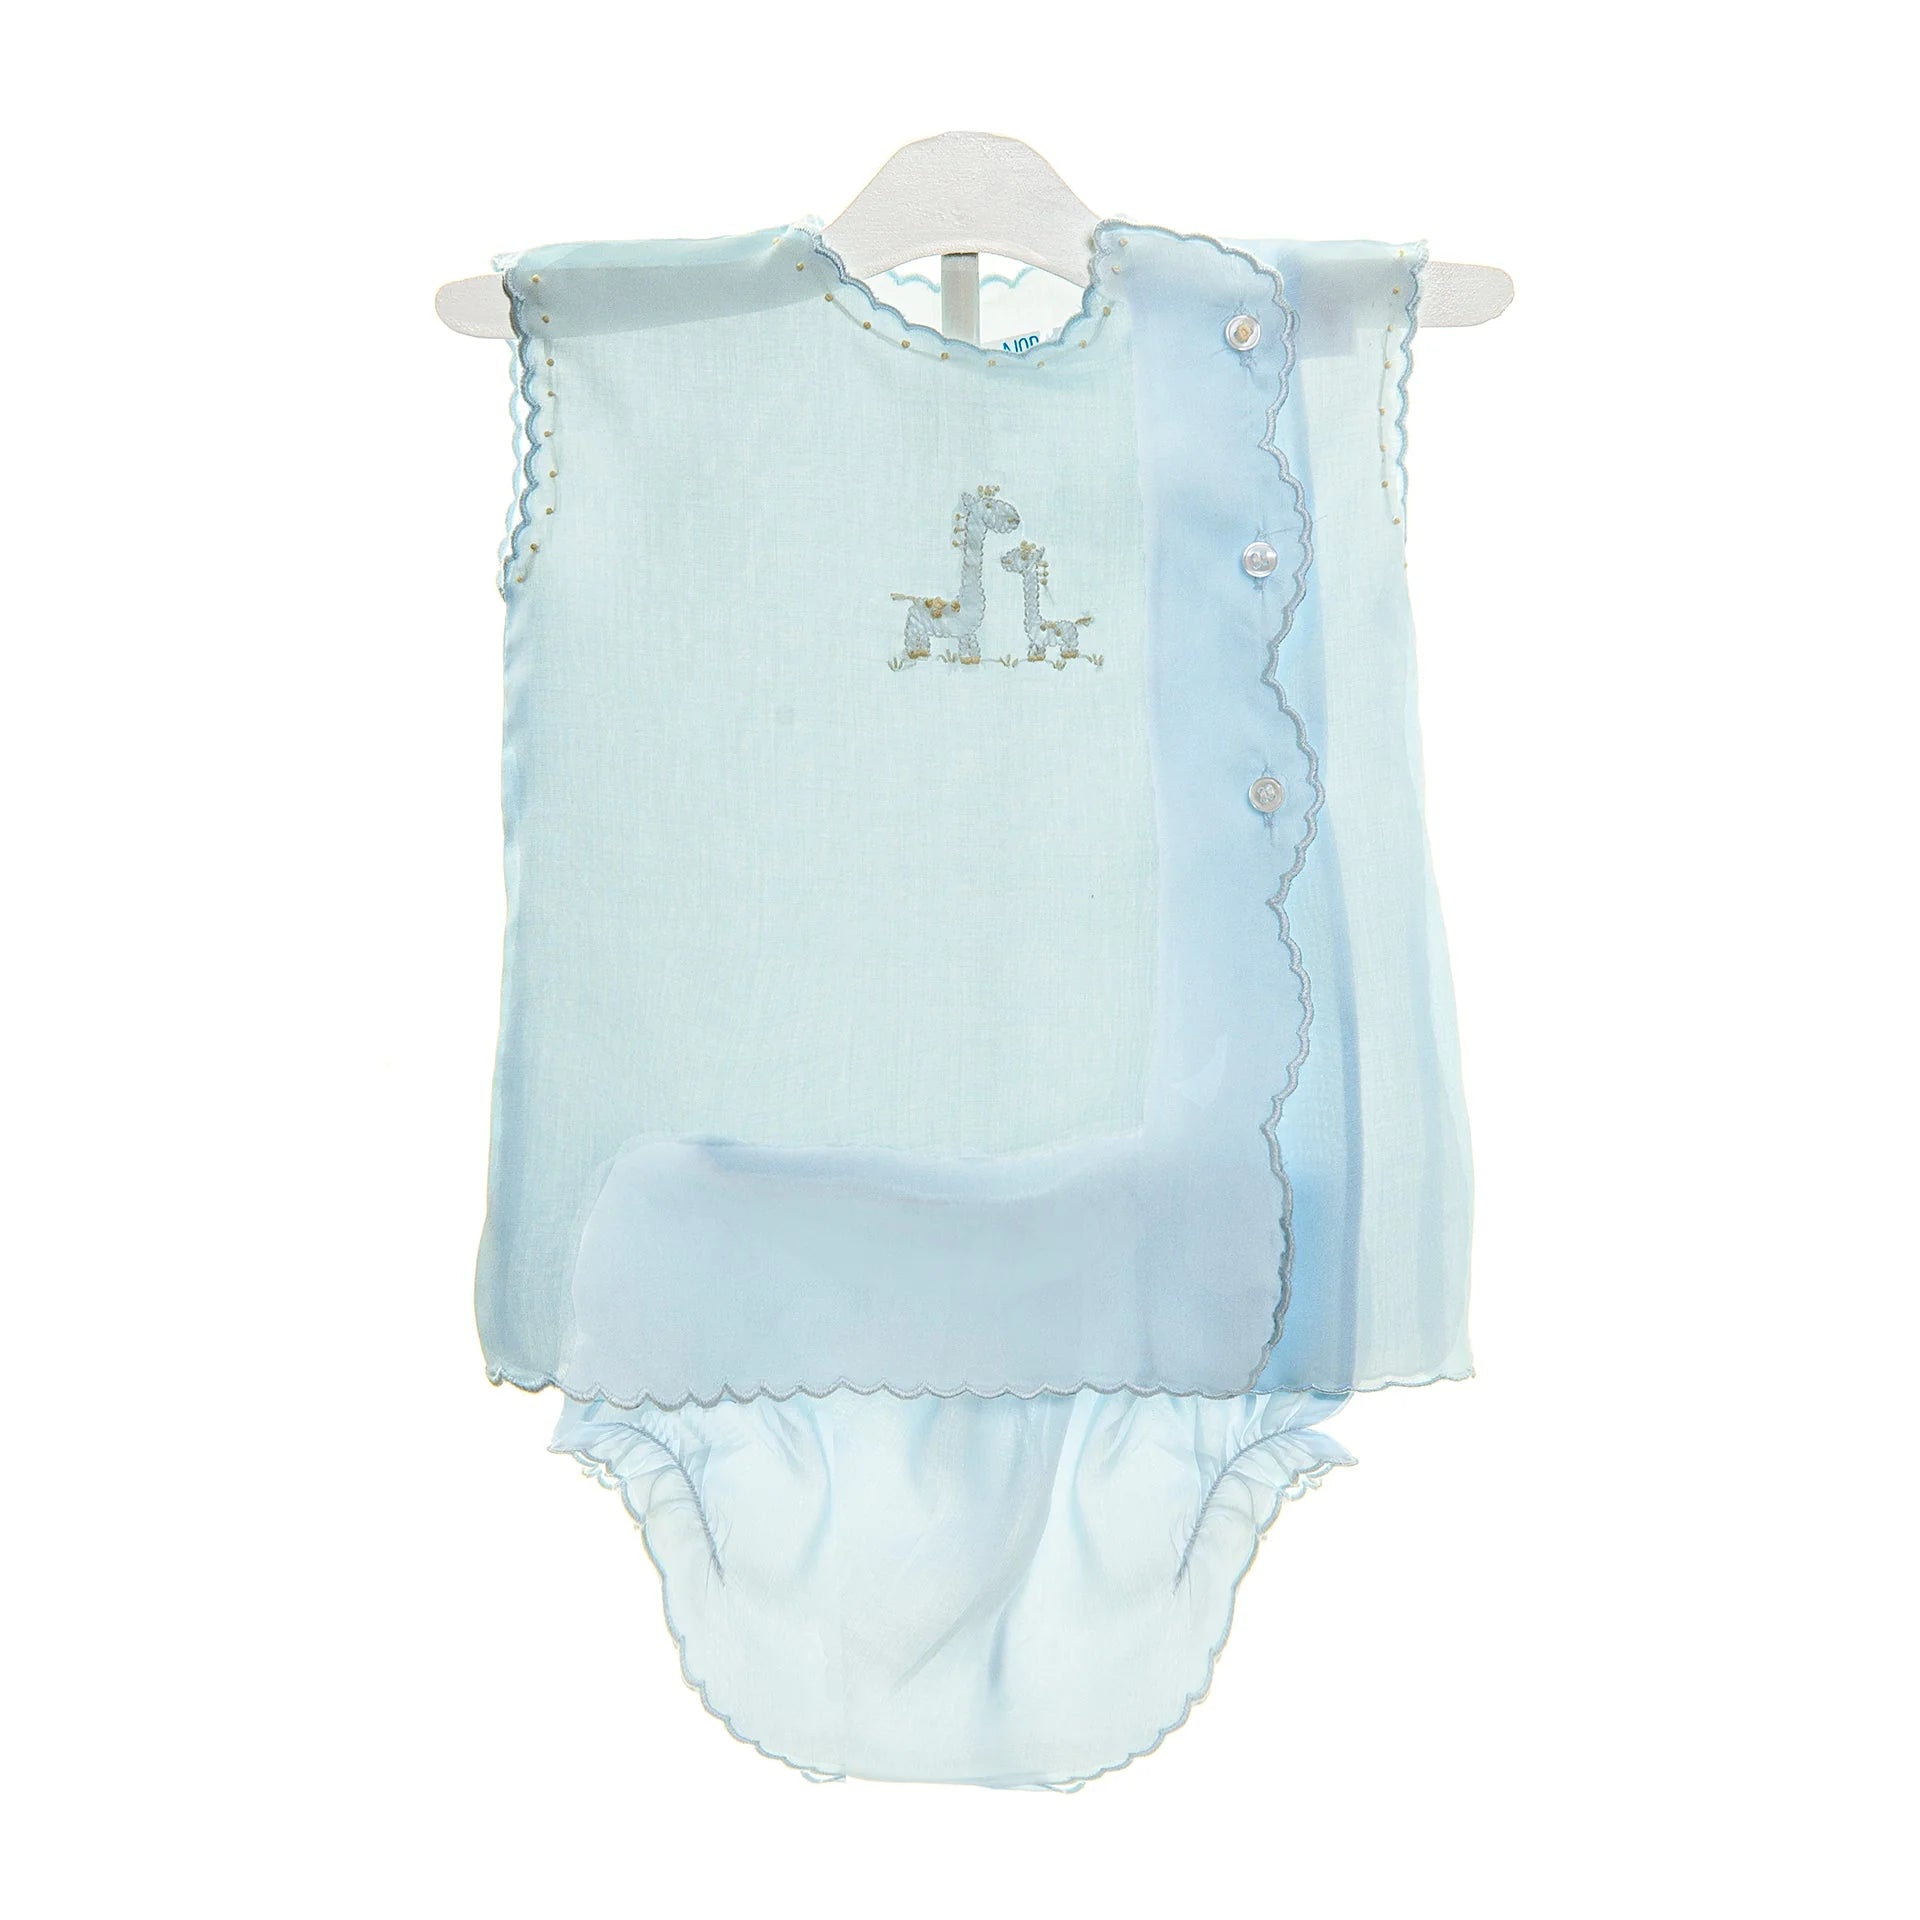 Lenora Baby Cotton Diaper Set blue with giraffes 